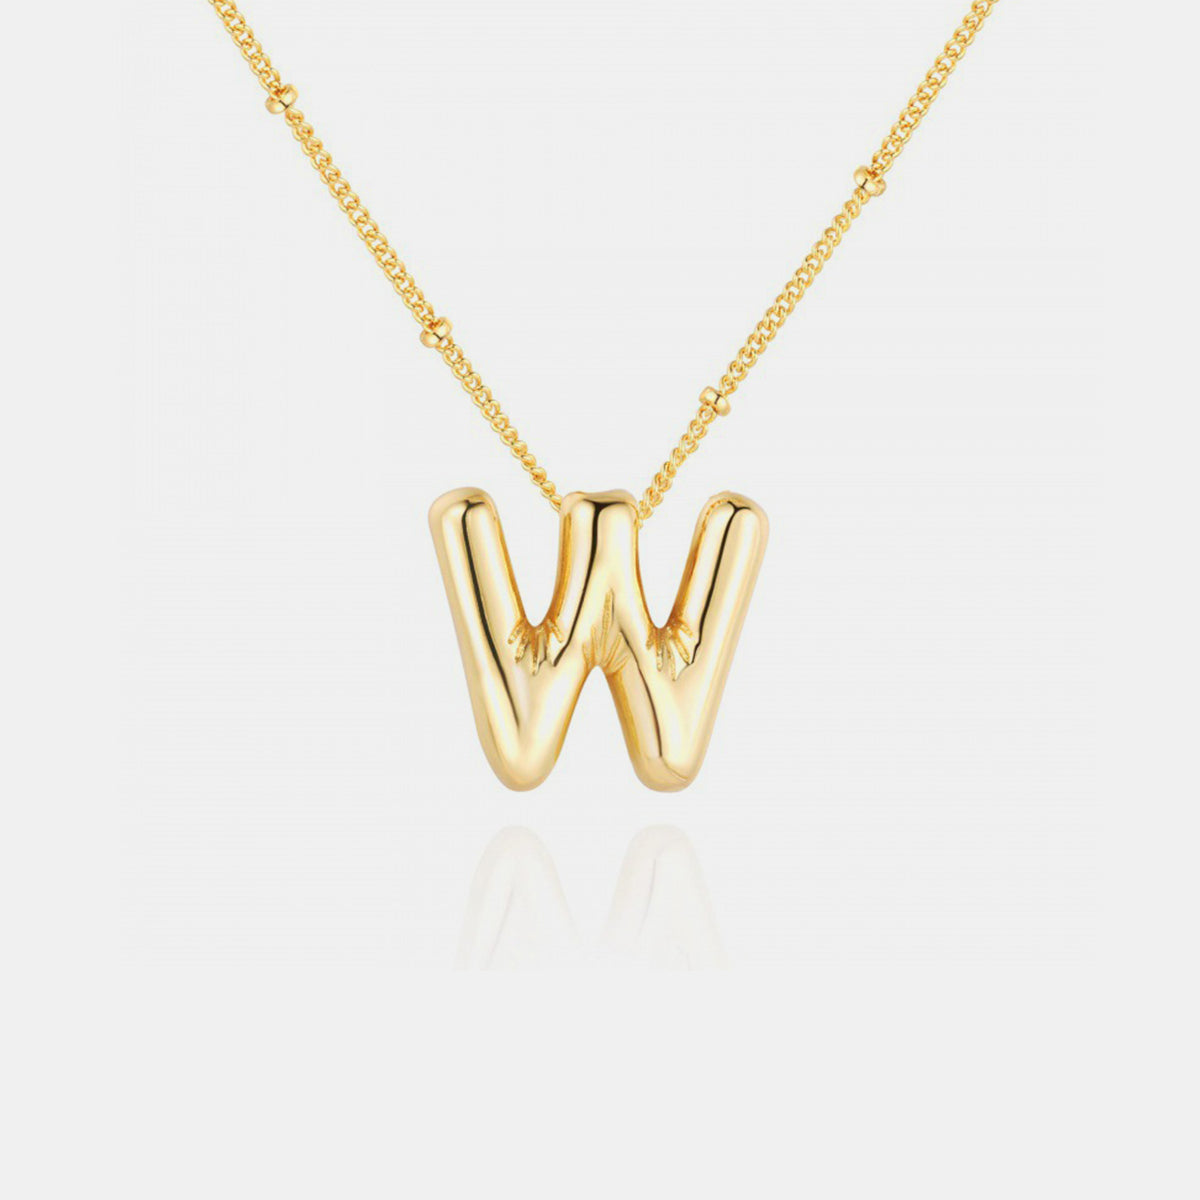 TEEK - T-Z Gold-Plated Letter Necklace JEWELRY TEEK Trend Style W  